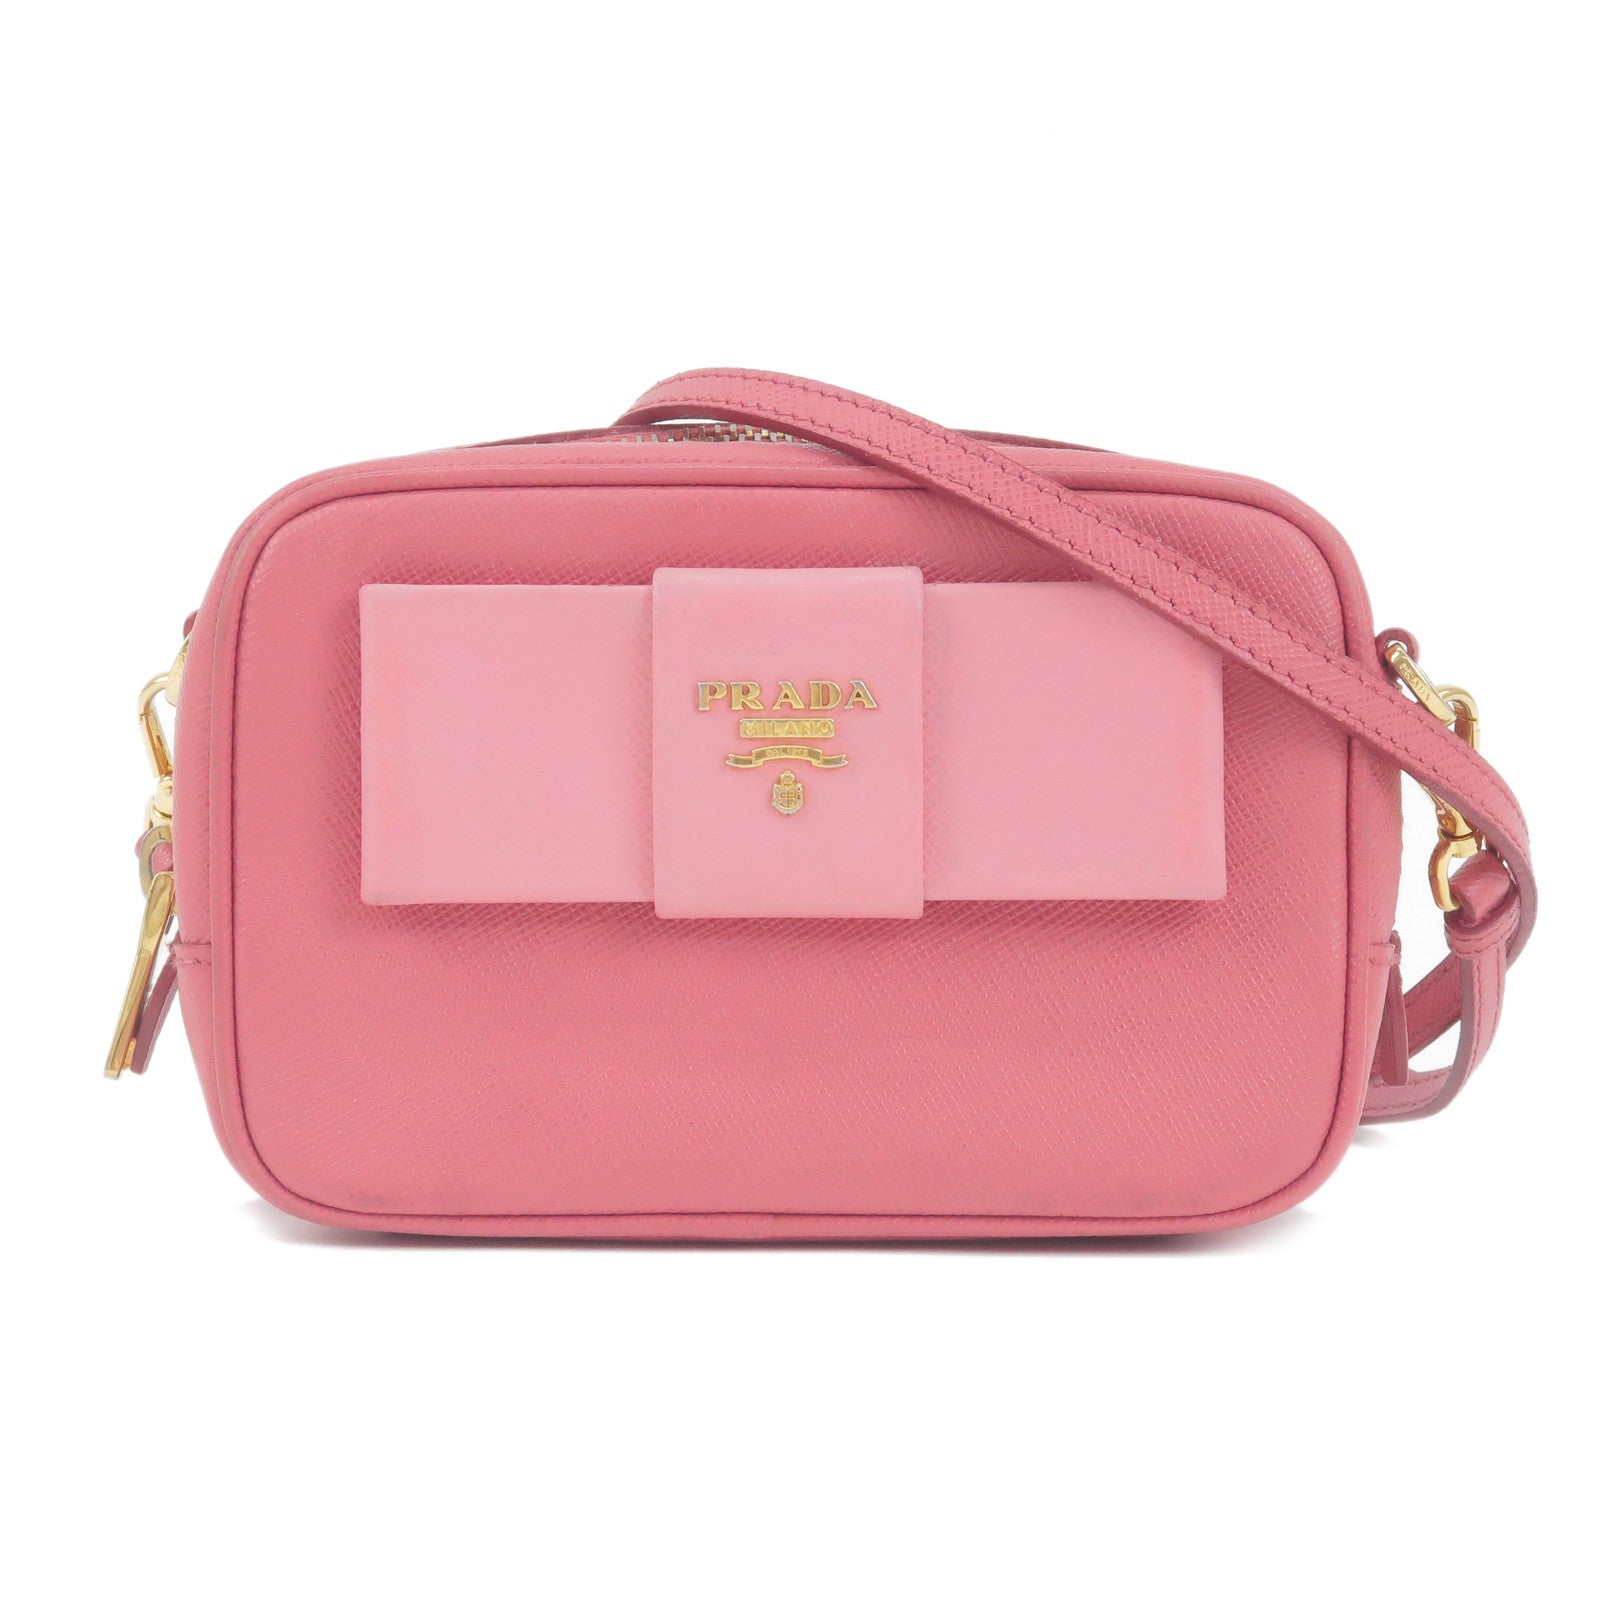 PRADA-Bow-Ribbon-Leather-Shoulder-Bag-Purse-Pink